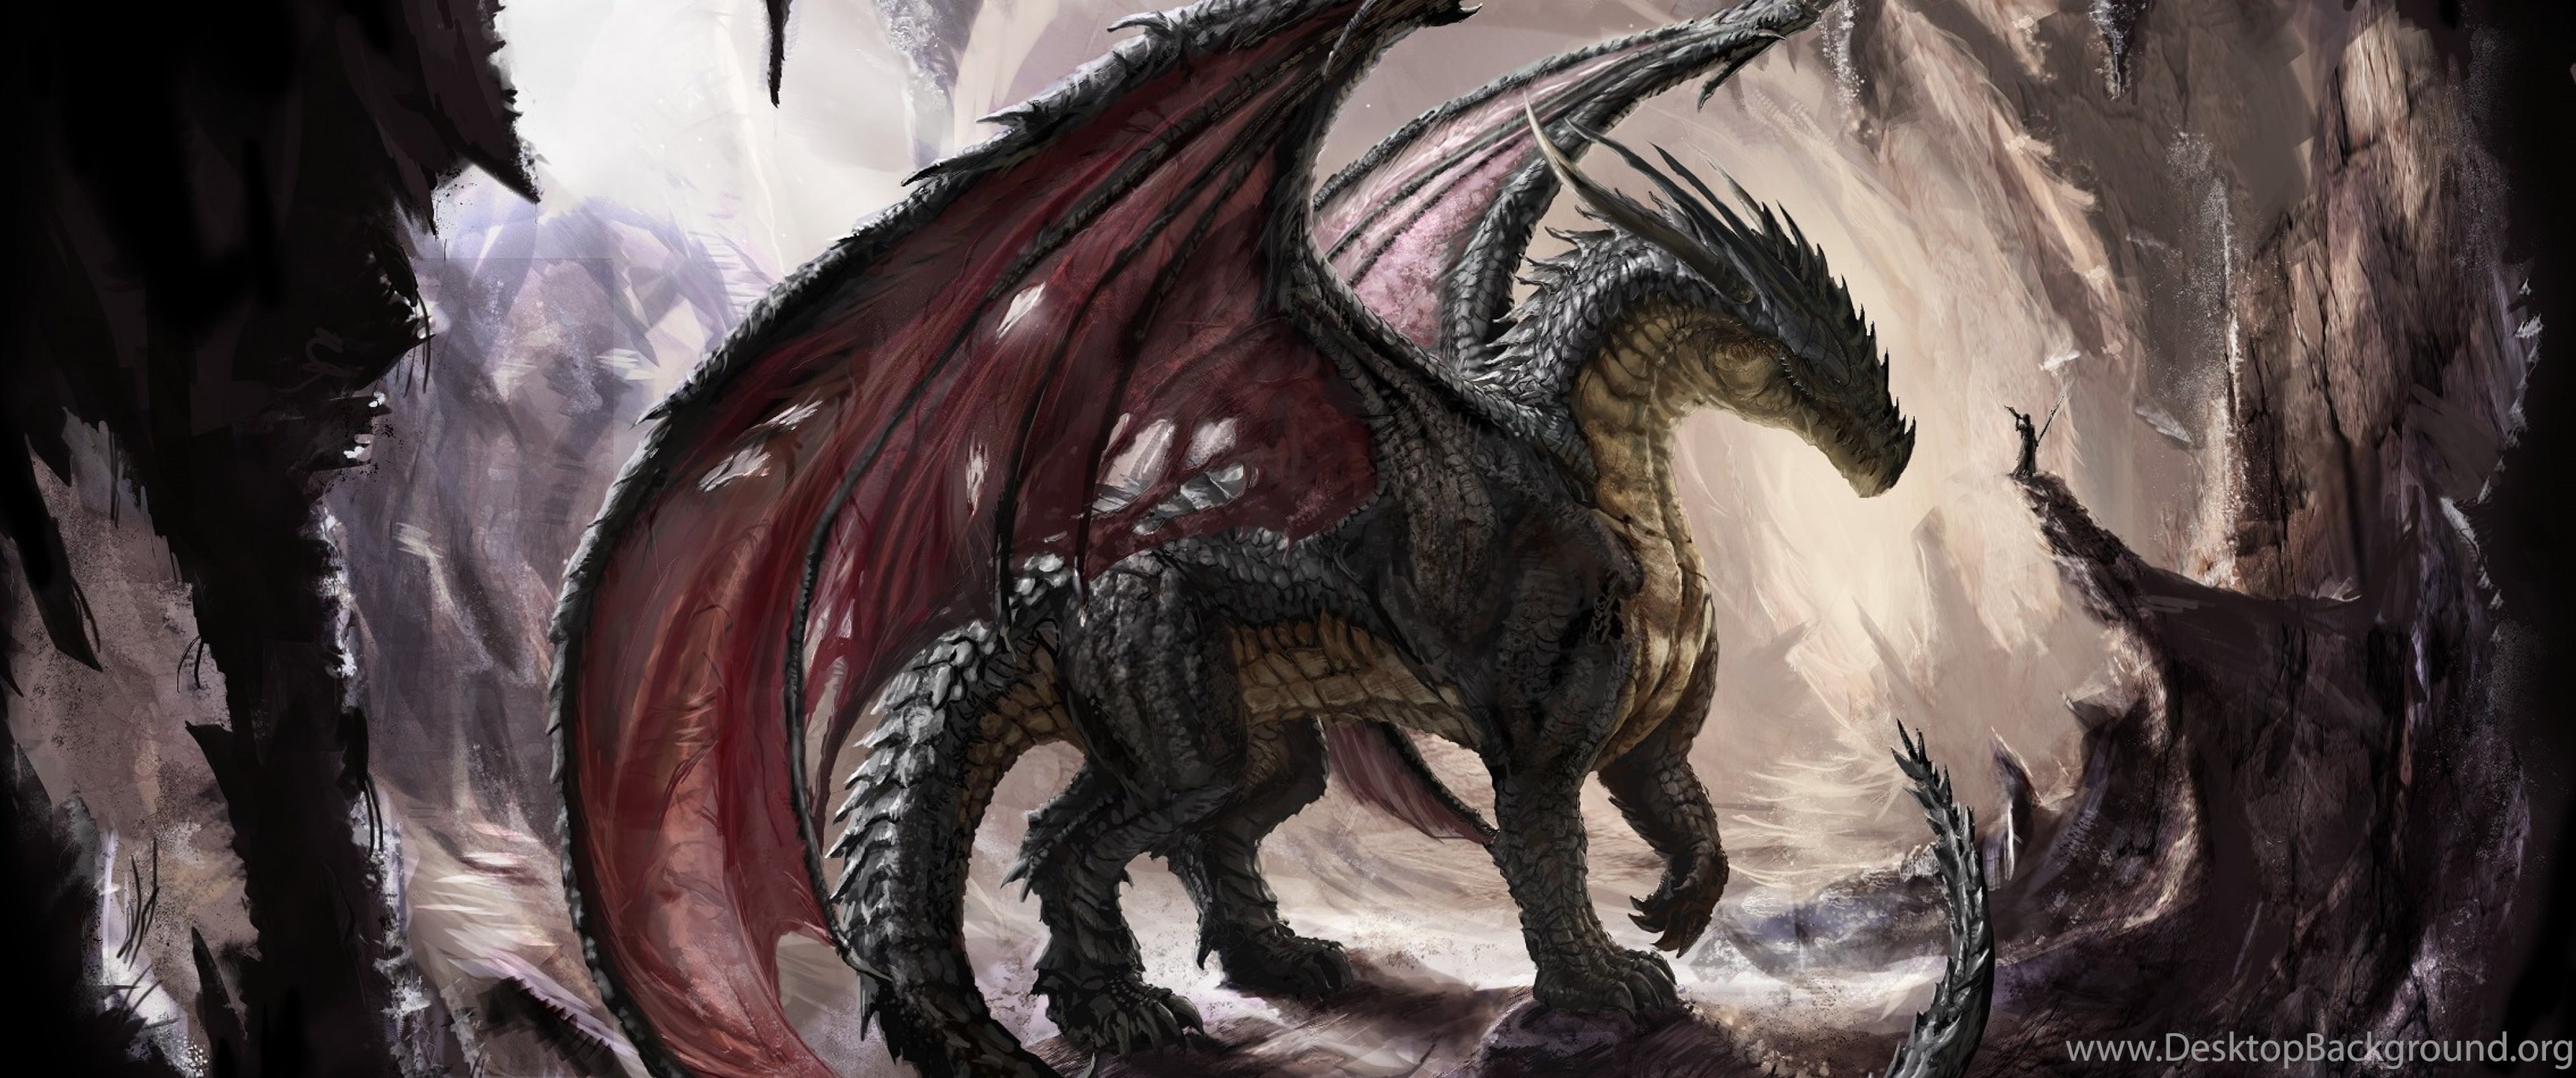 dragones wallpaper hd,dragon,fictional character,mythical creature,cg artwork,mythology